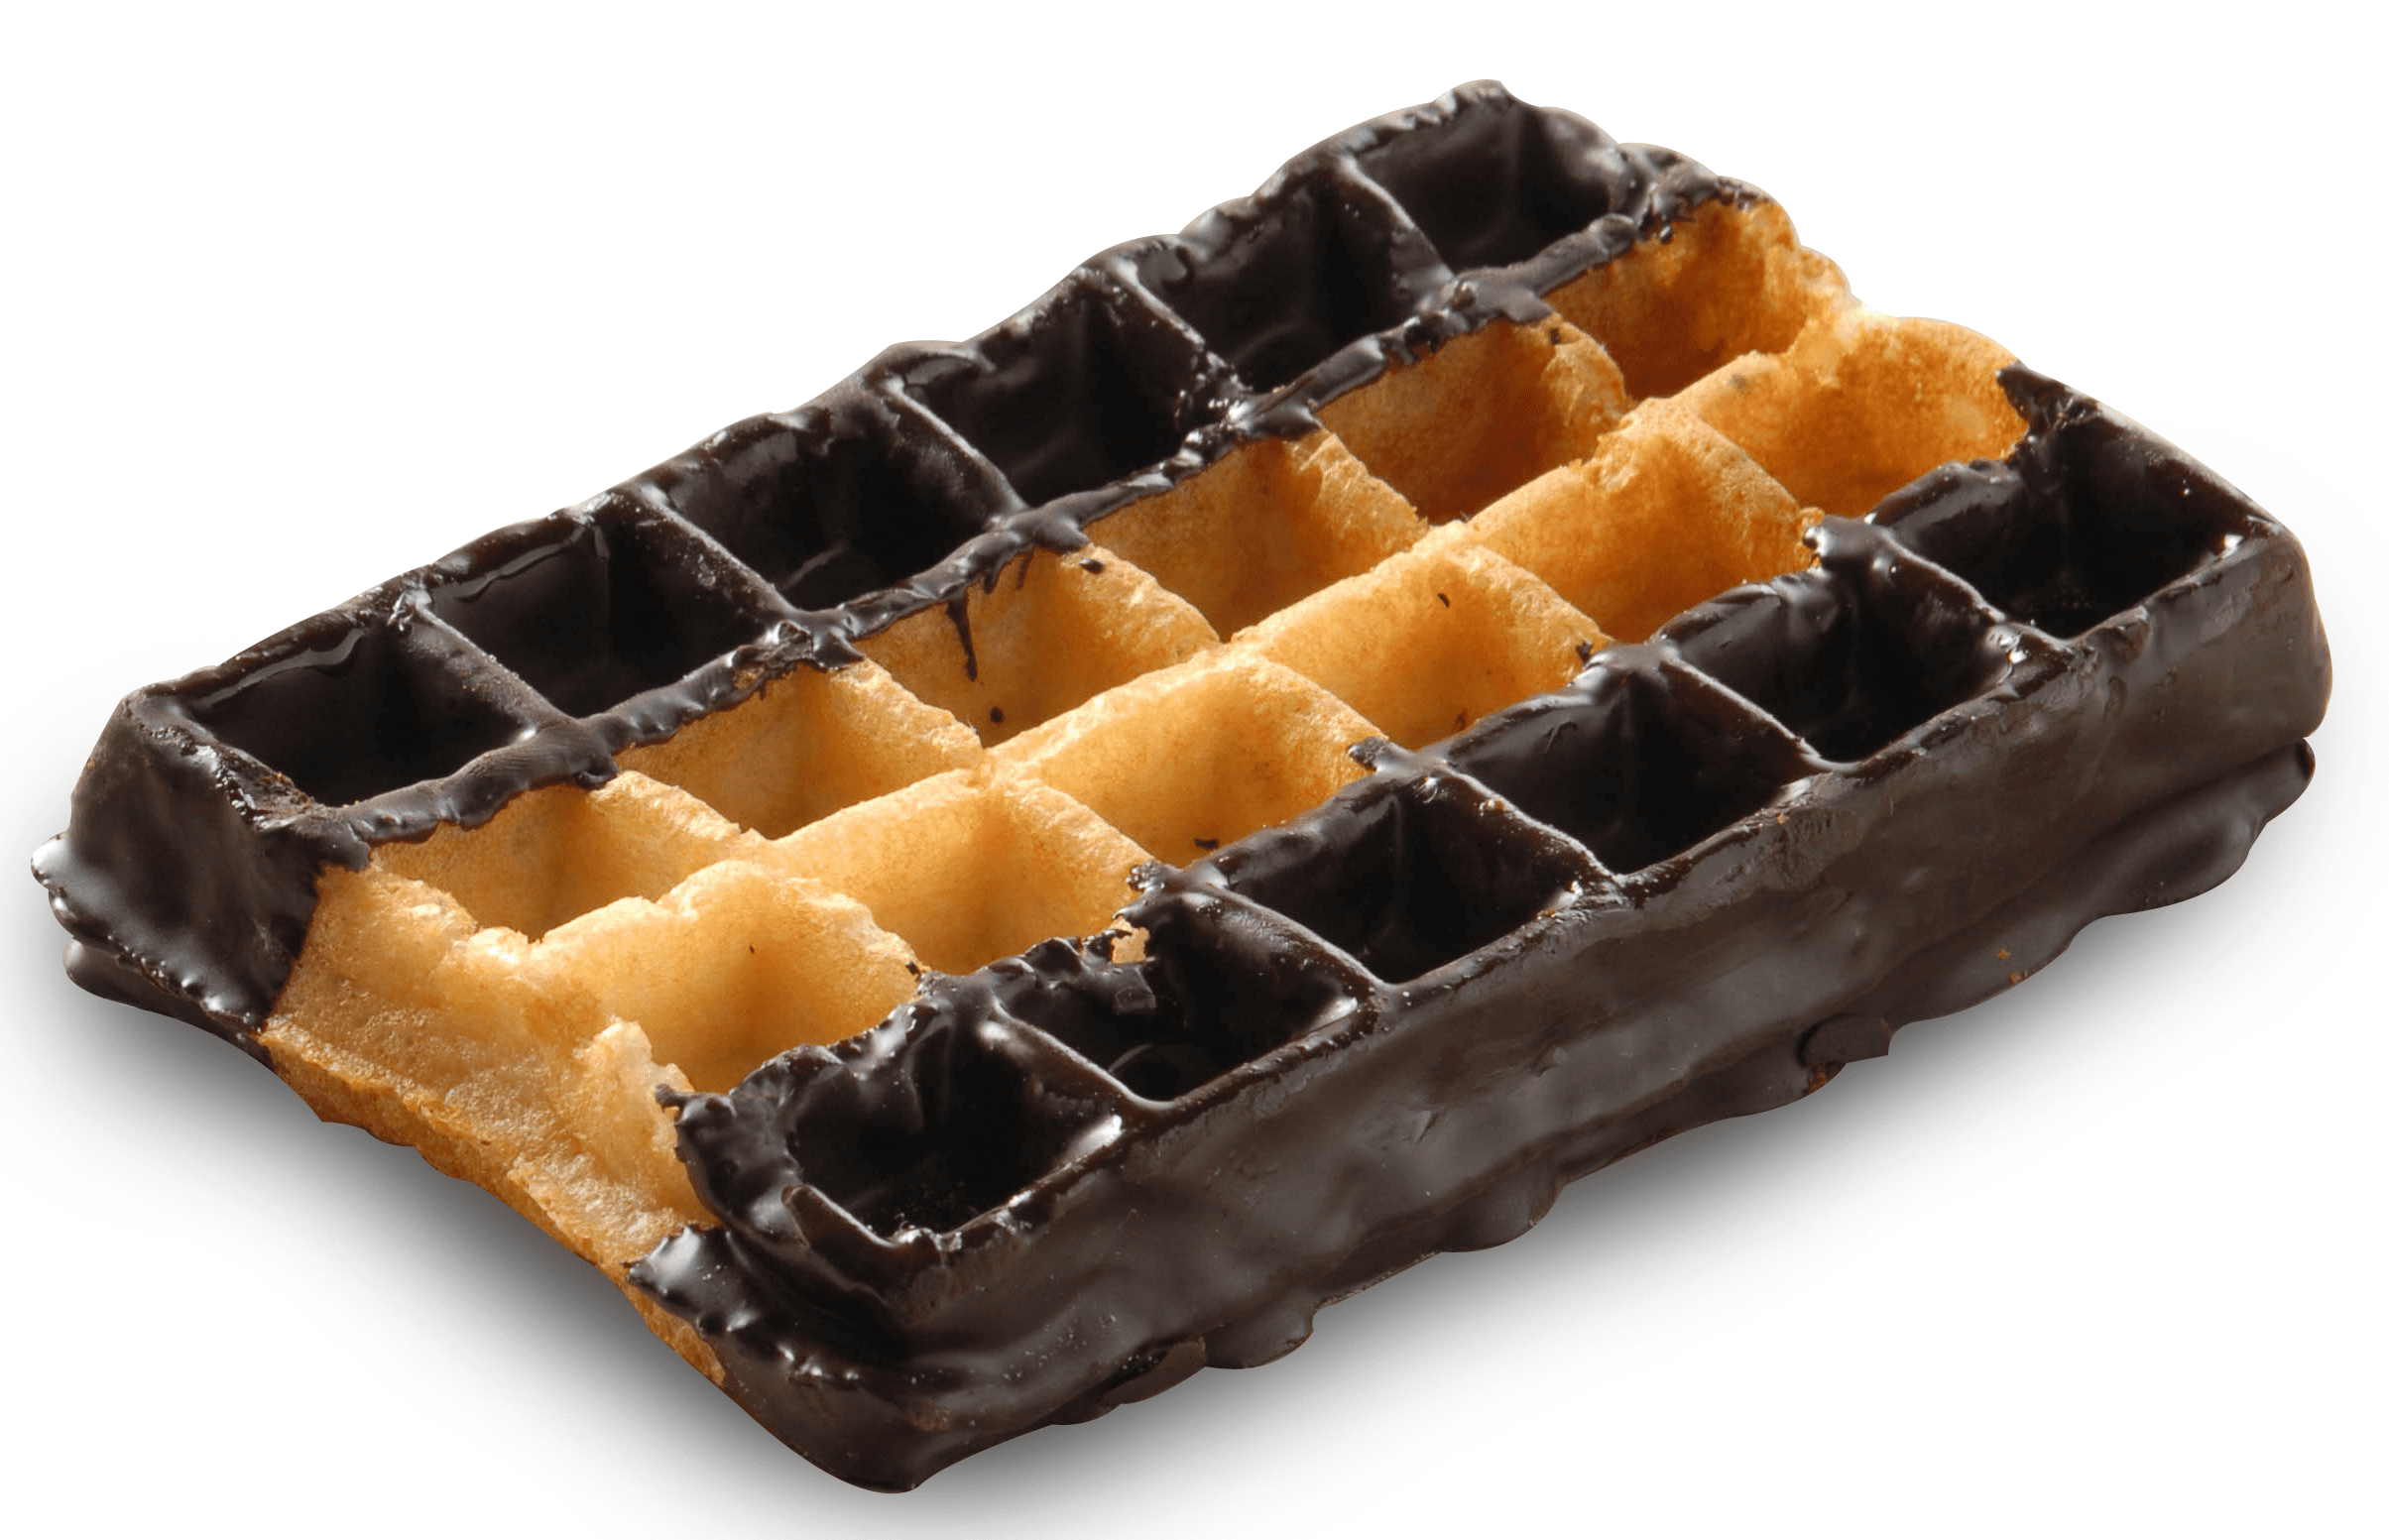 布魯塞爾巧克力鬆餅 Brussels Chocolate Waffle